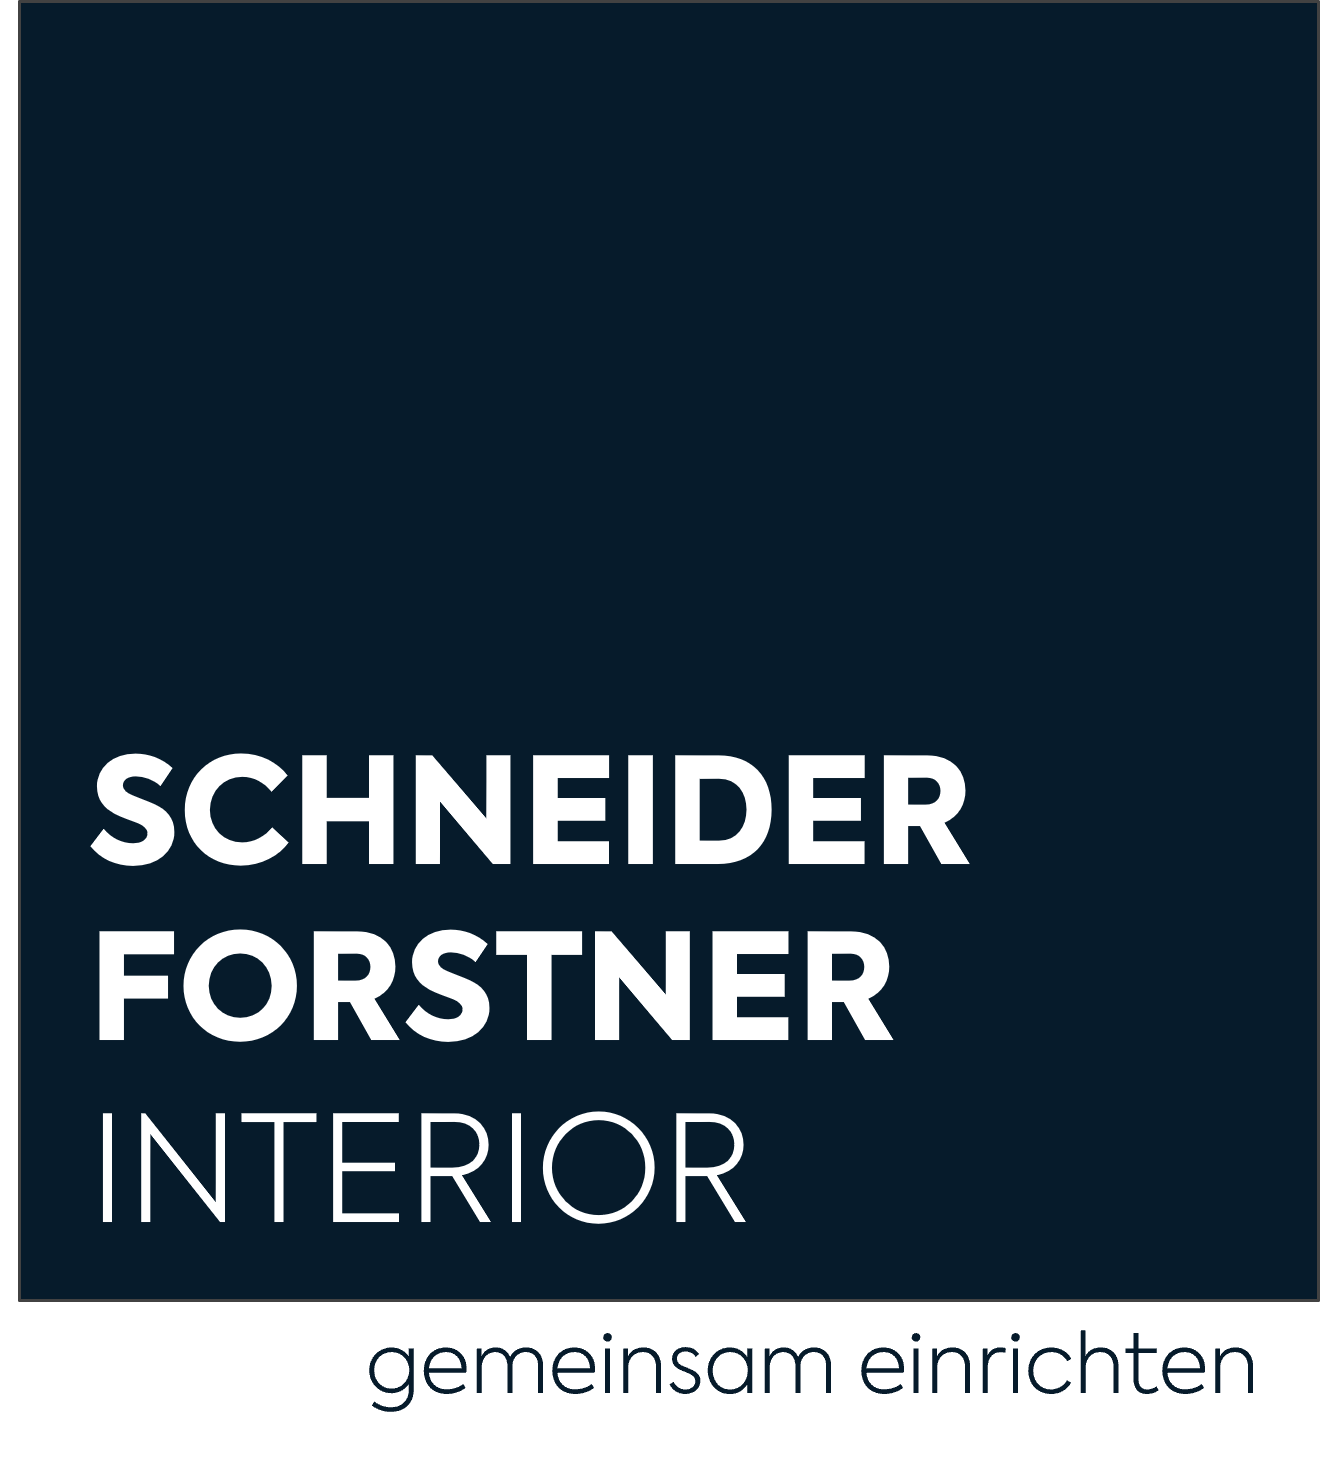 Schneider Forstner Interior